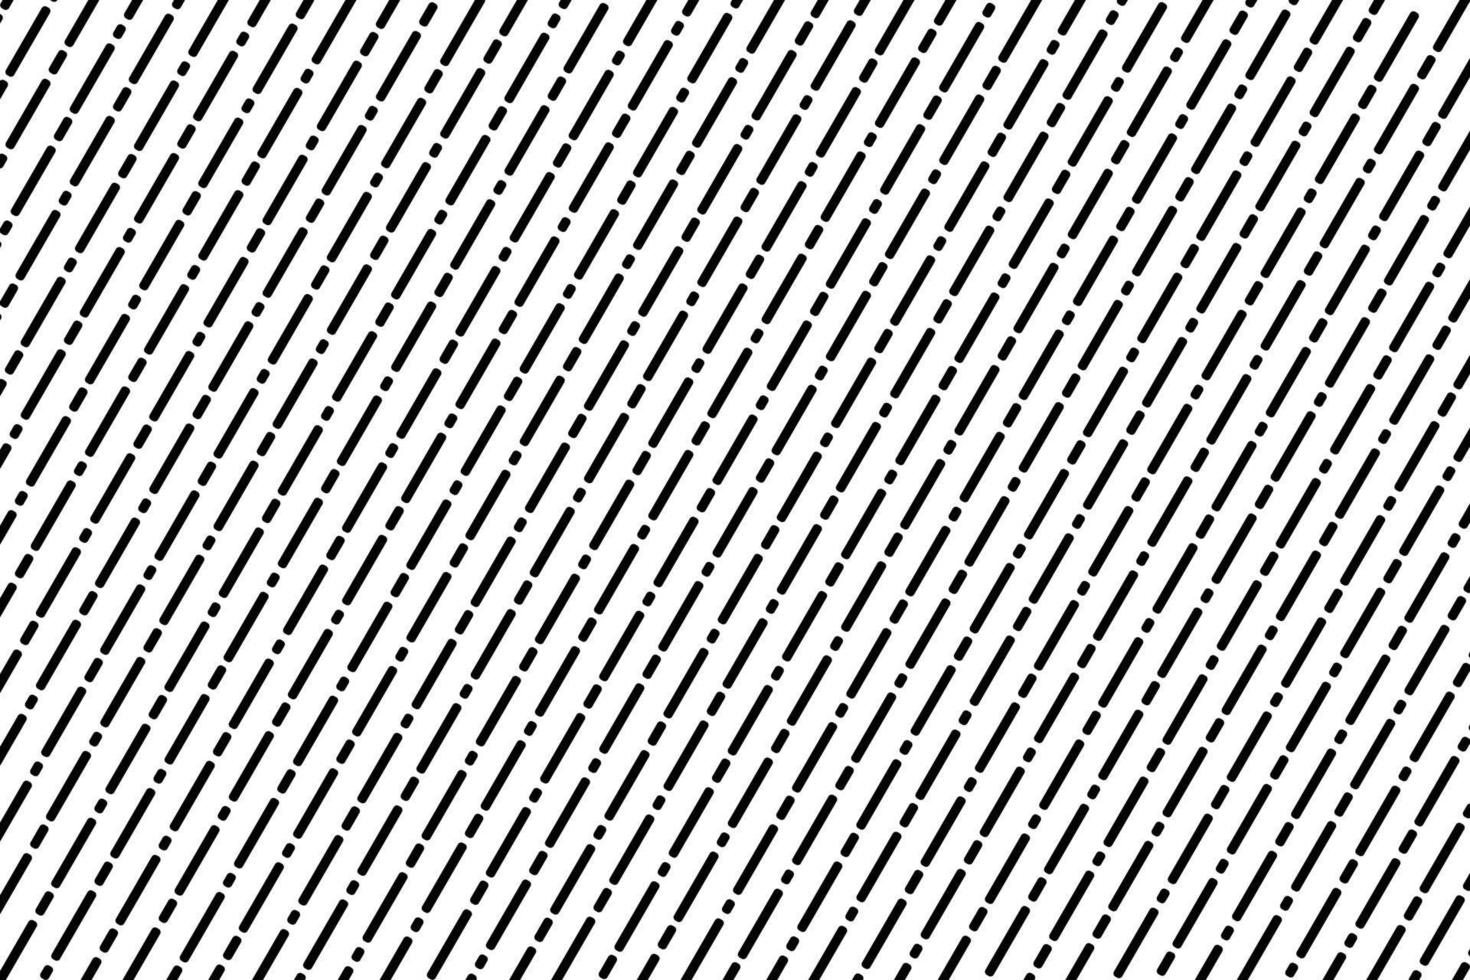 abstrakt diagonal linje rand mönster. vektor